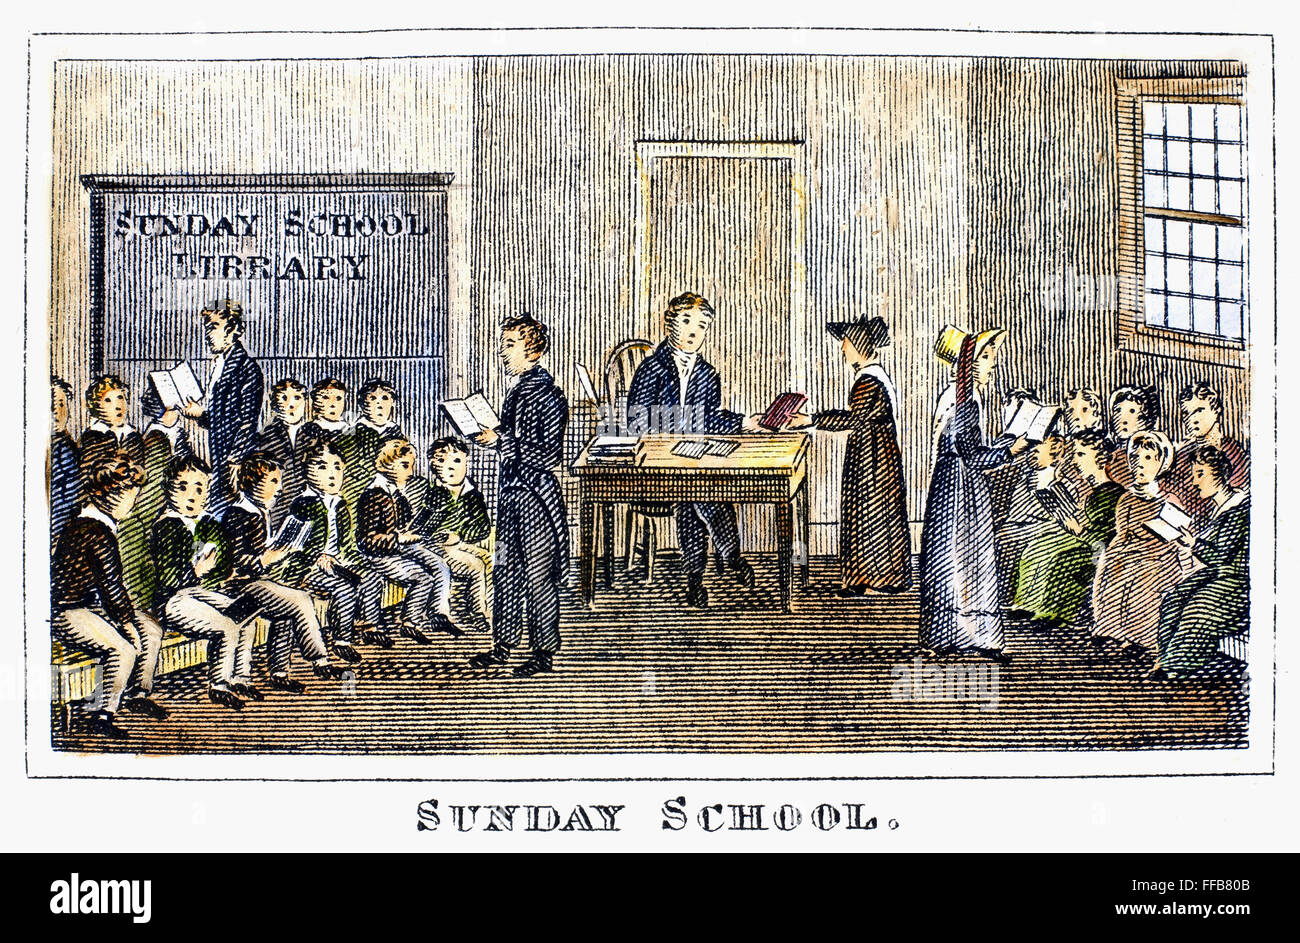 SUNDAY SCHOOL, 1832. /nLine engraving, American, 1832. Stock Photo